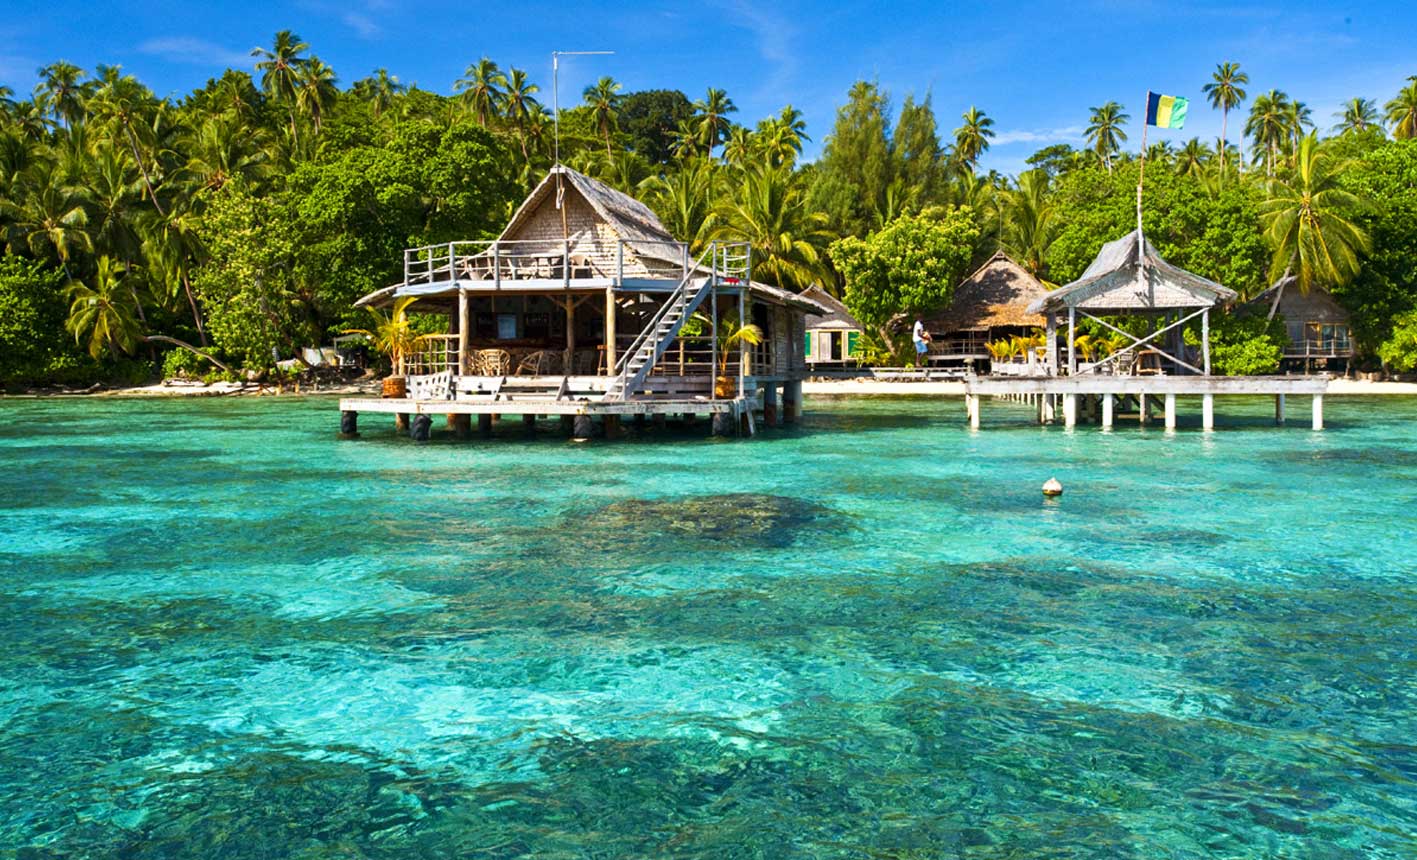 460x276px 36.44 KB Solomon Islands